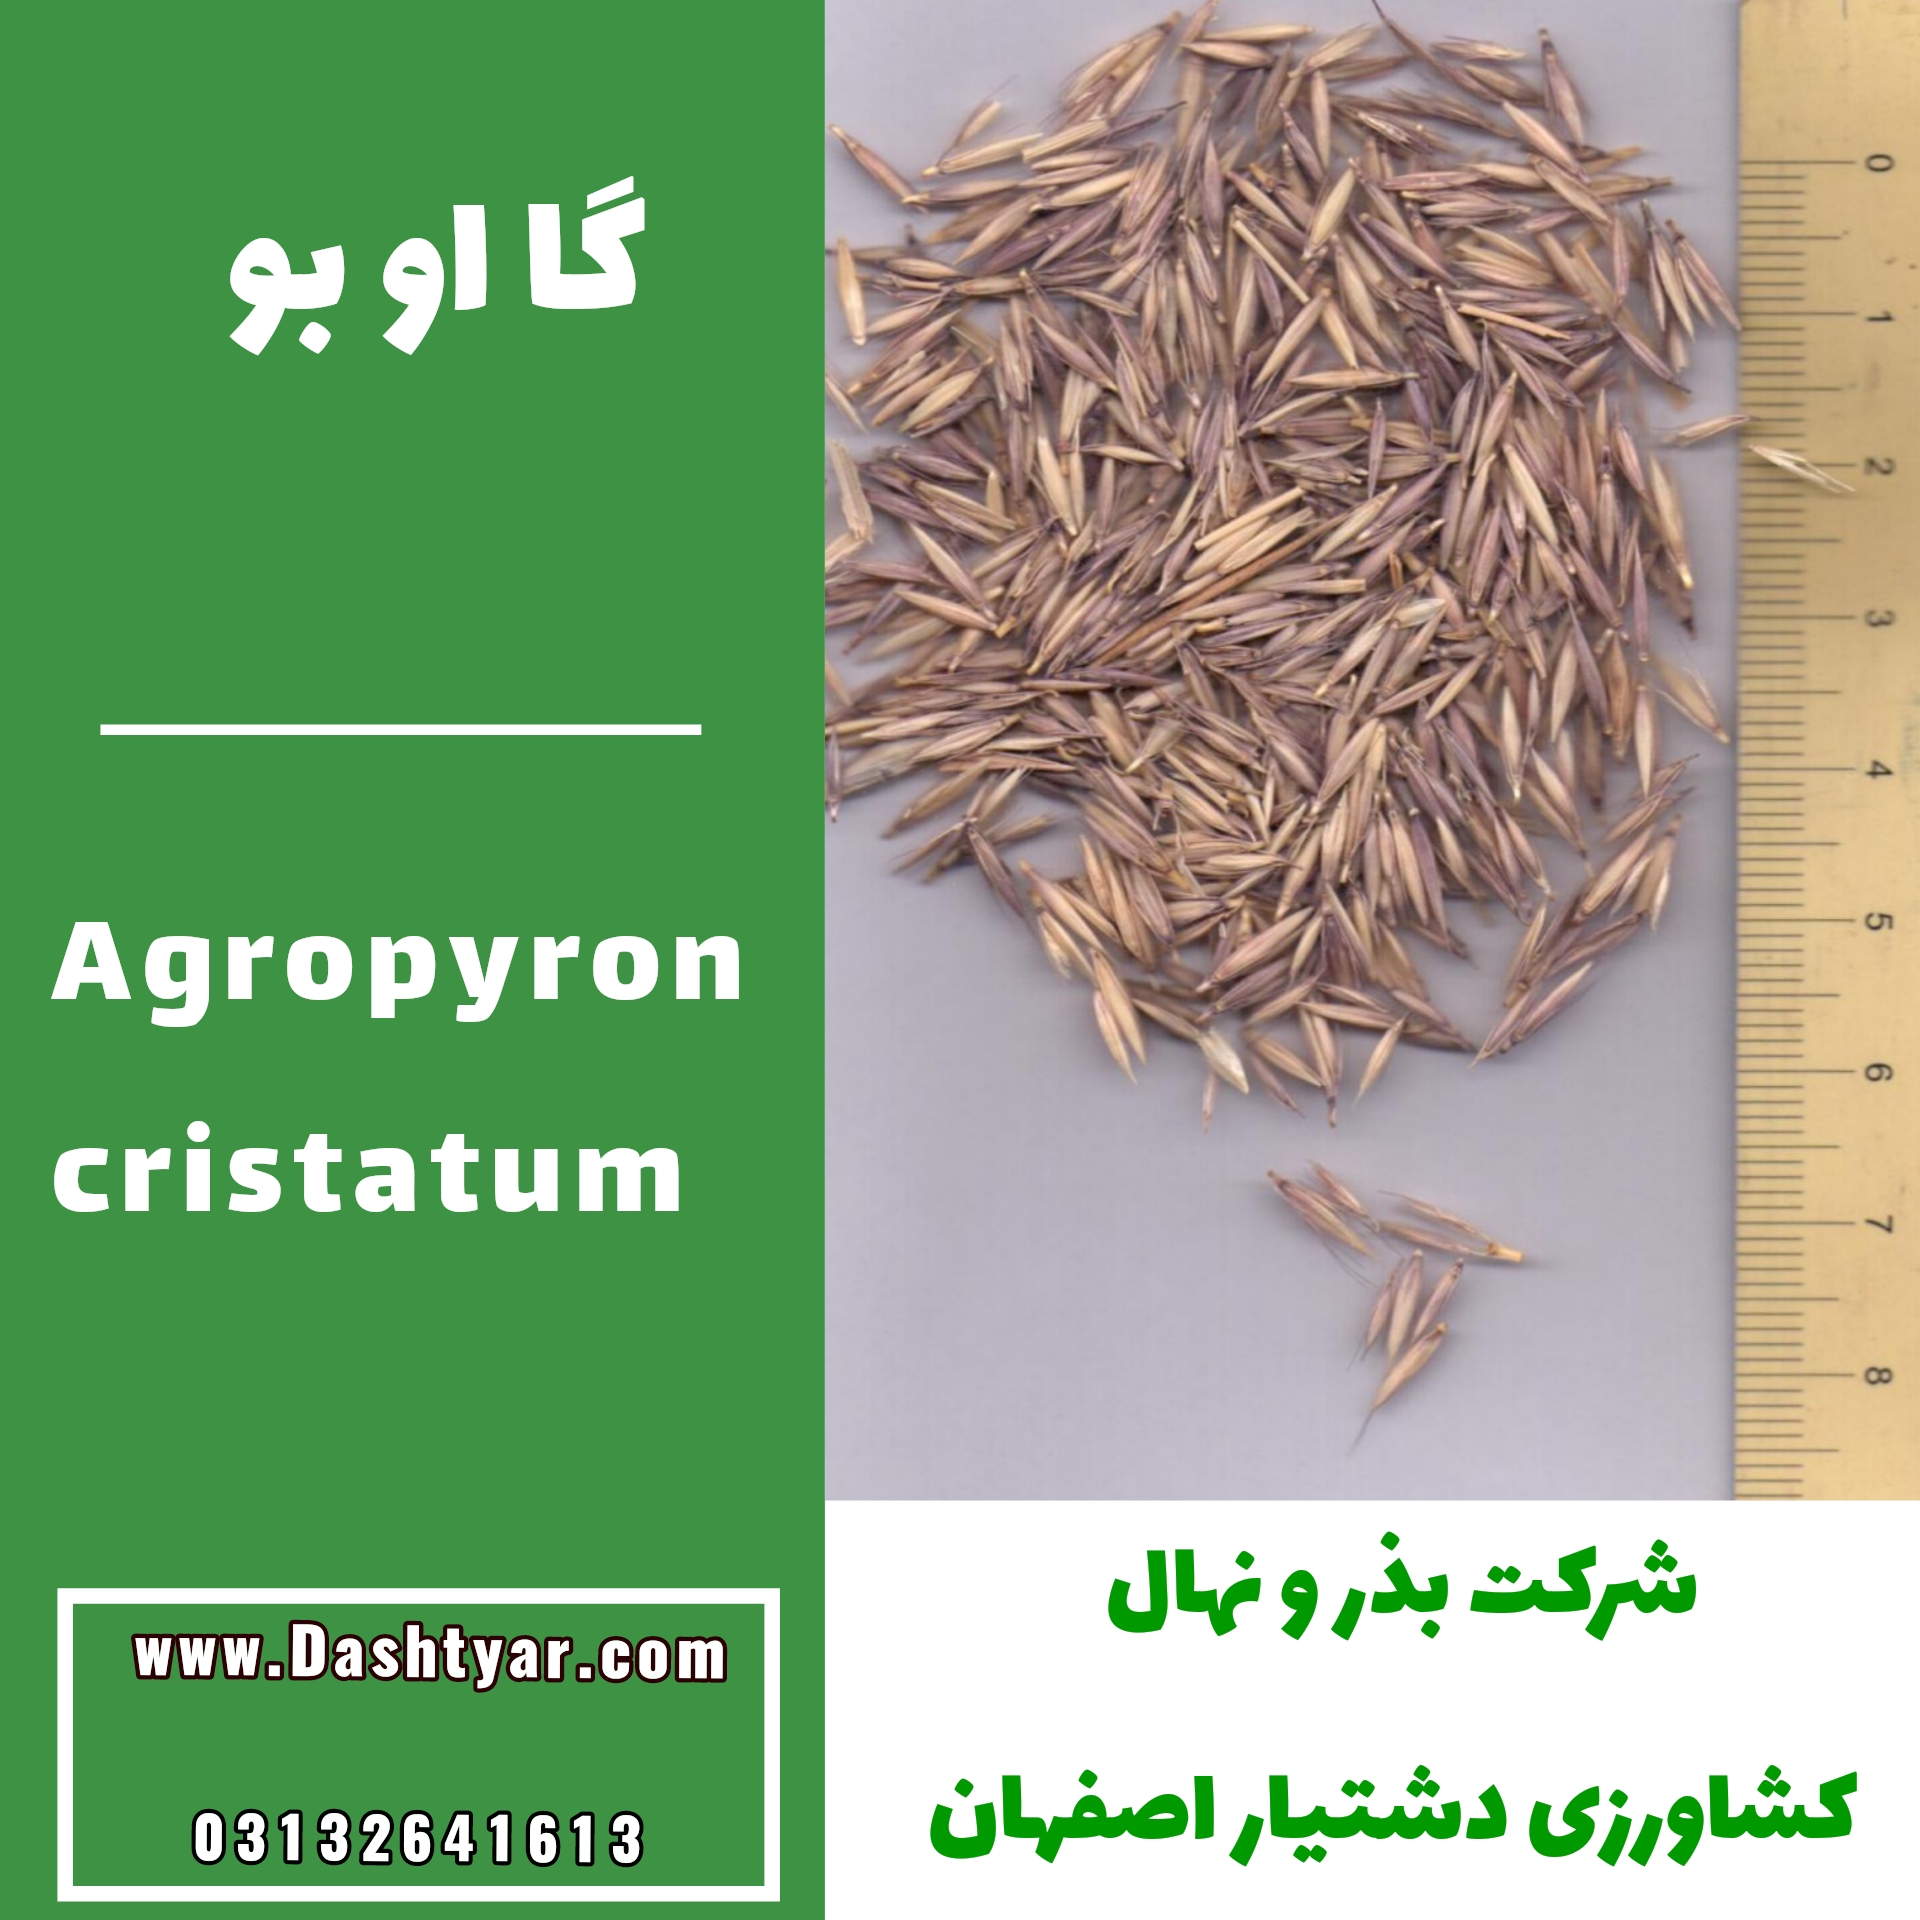 بذر آگروپایرون کریستاتوم یا گااوبو بذر گیاهان مرتعی